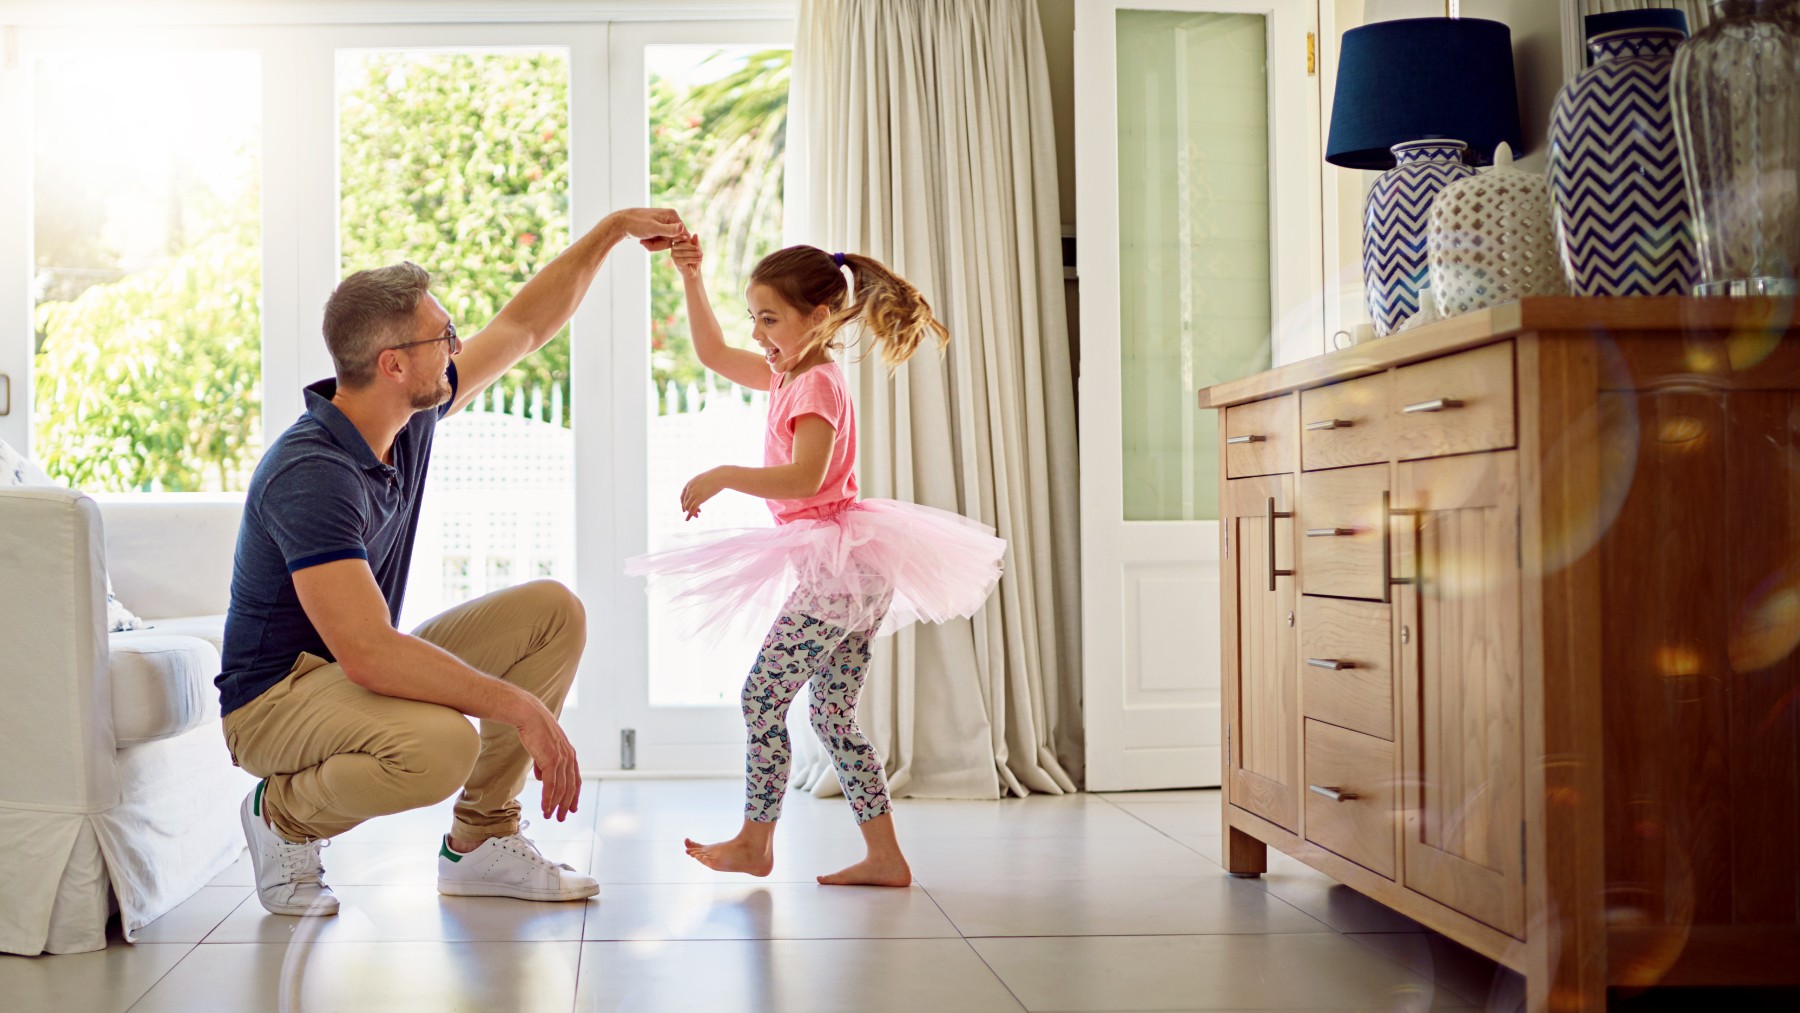 Dad teaching his daughter to dance